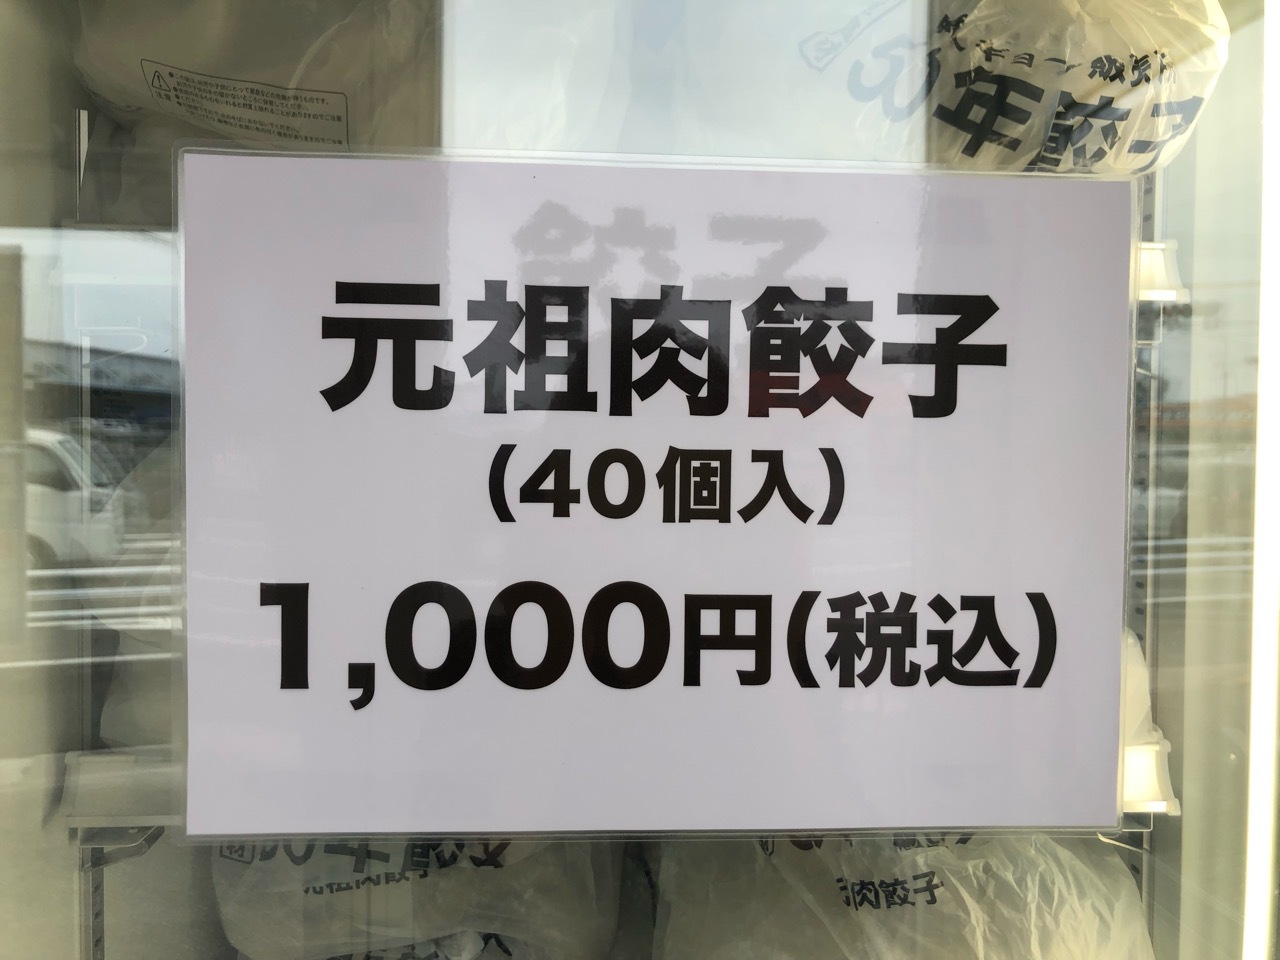 無人ギョーザ販売所「50年餃子」元祖肉餃子